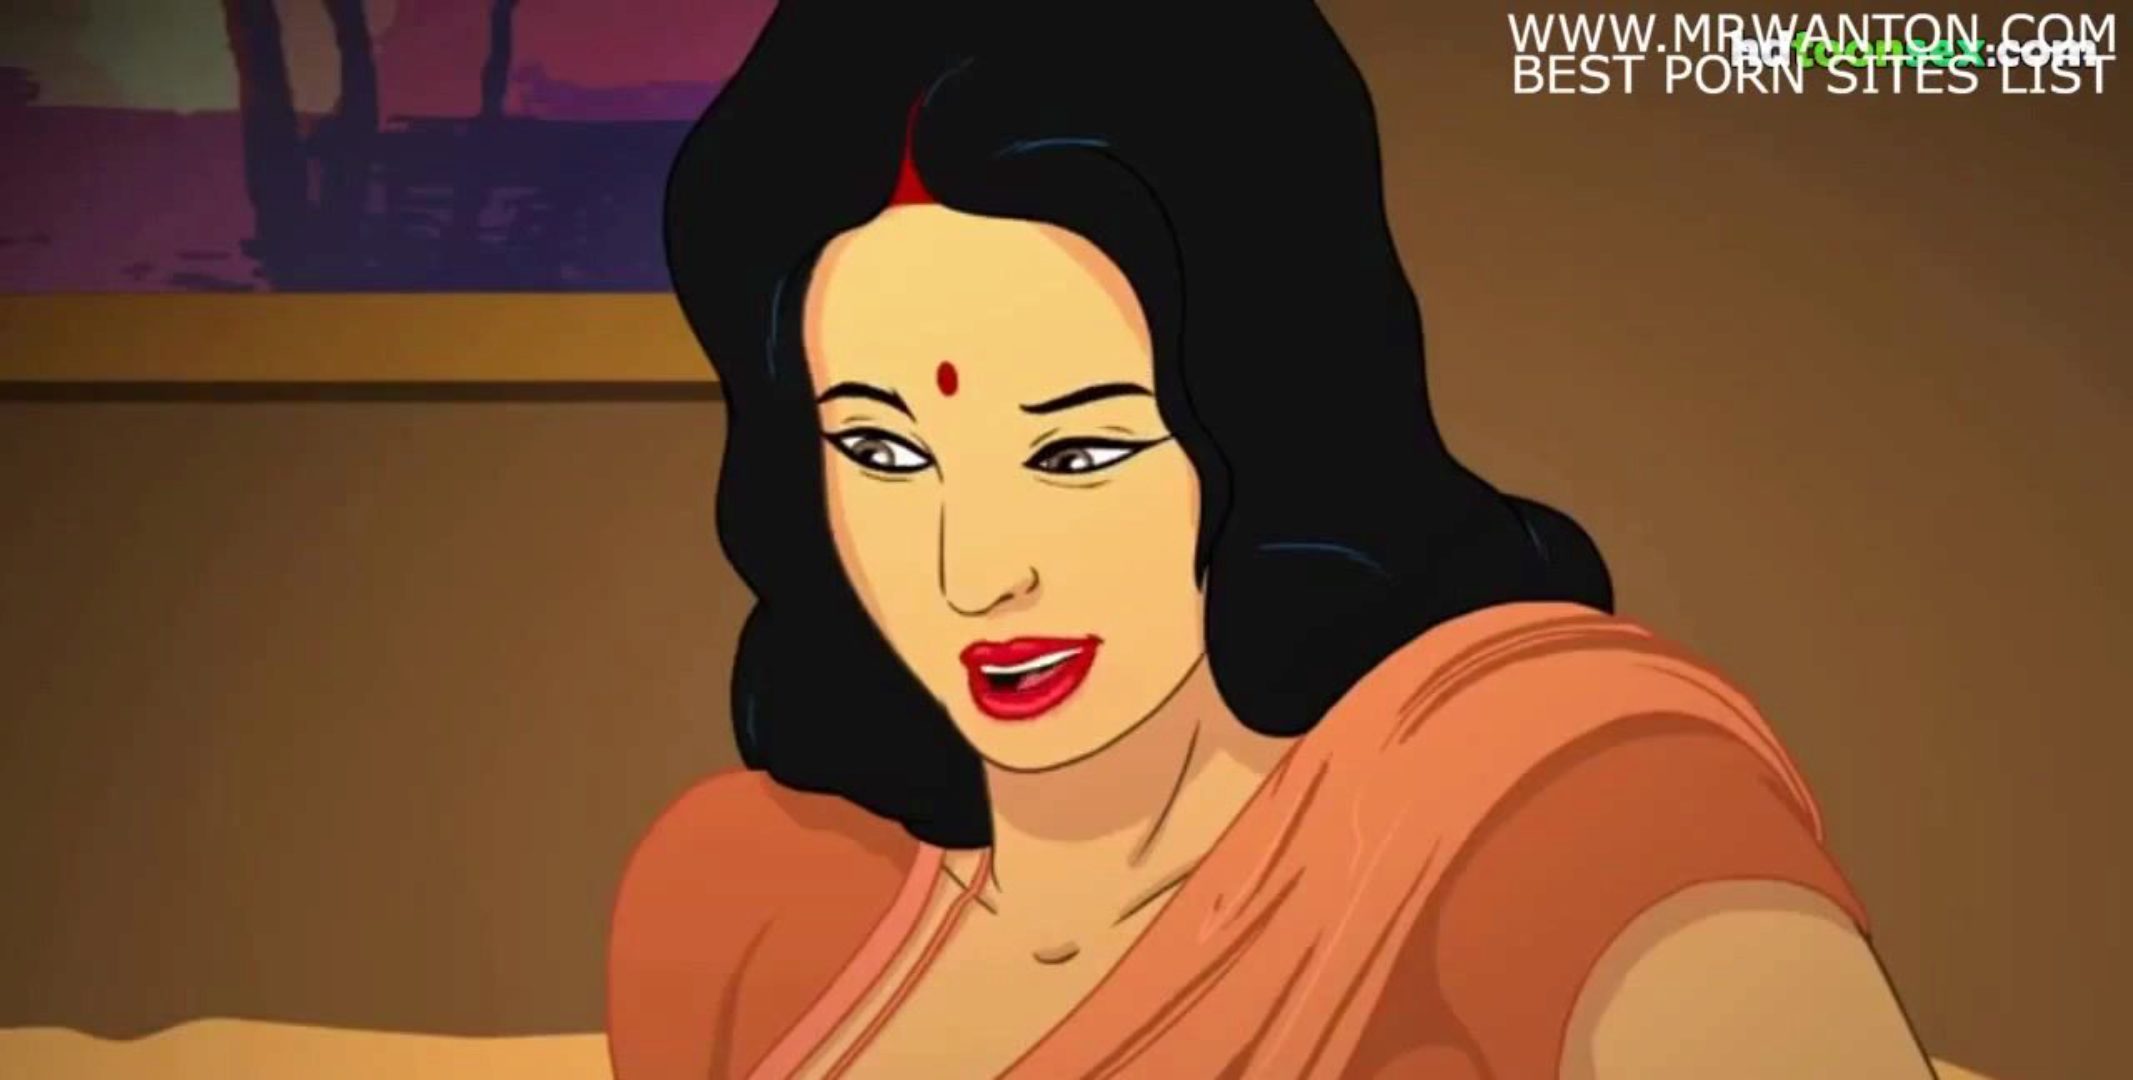 Sexi Hindi Video Full Hd - Indian Sexy Video Download Free Language Hindi - XVDS TV